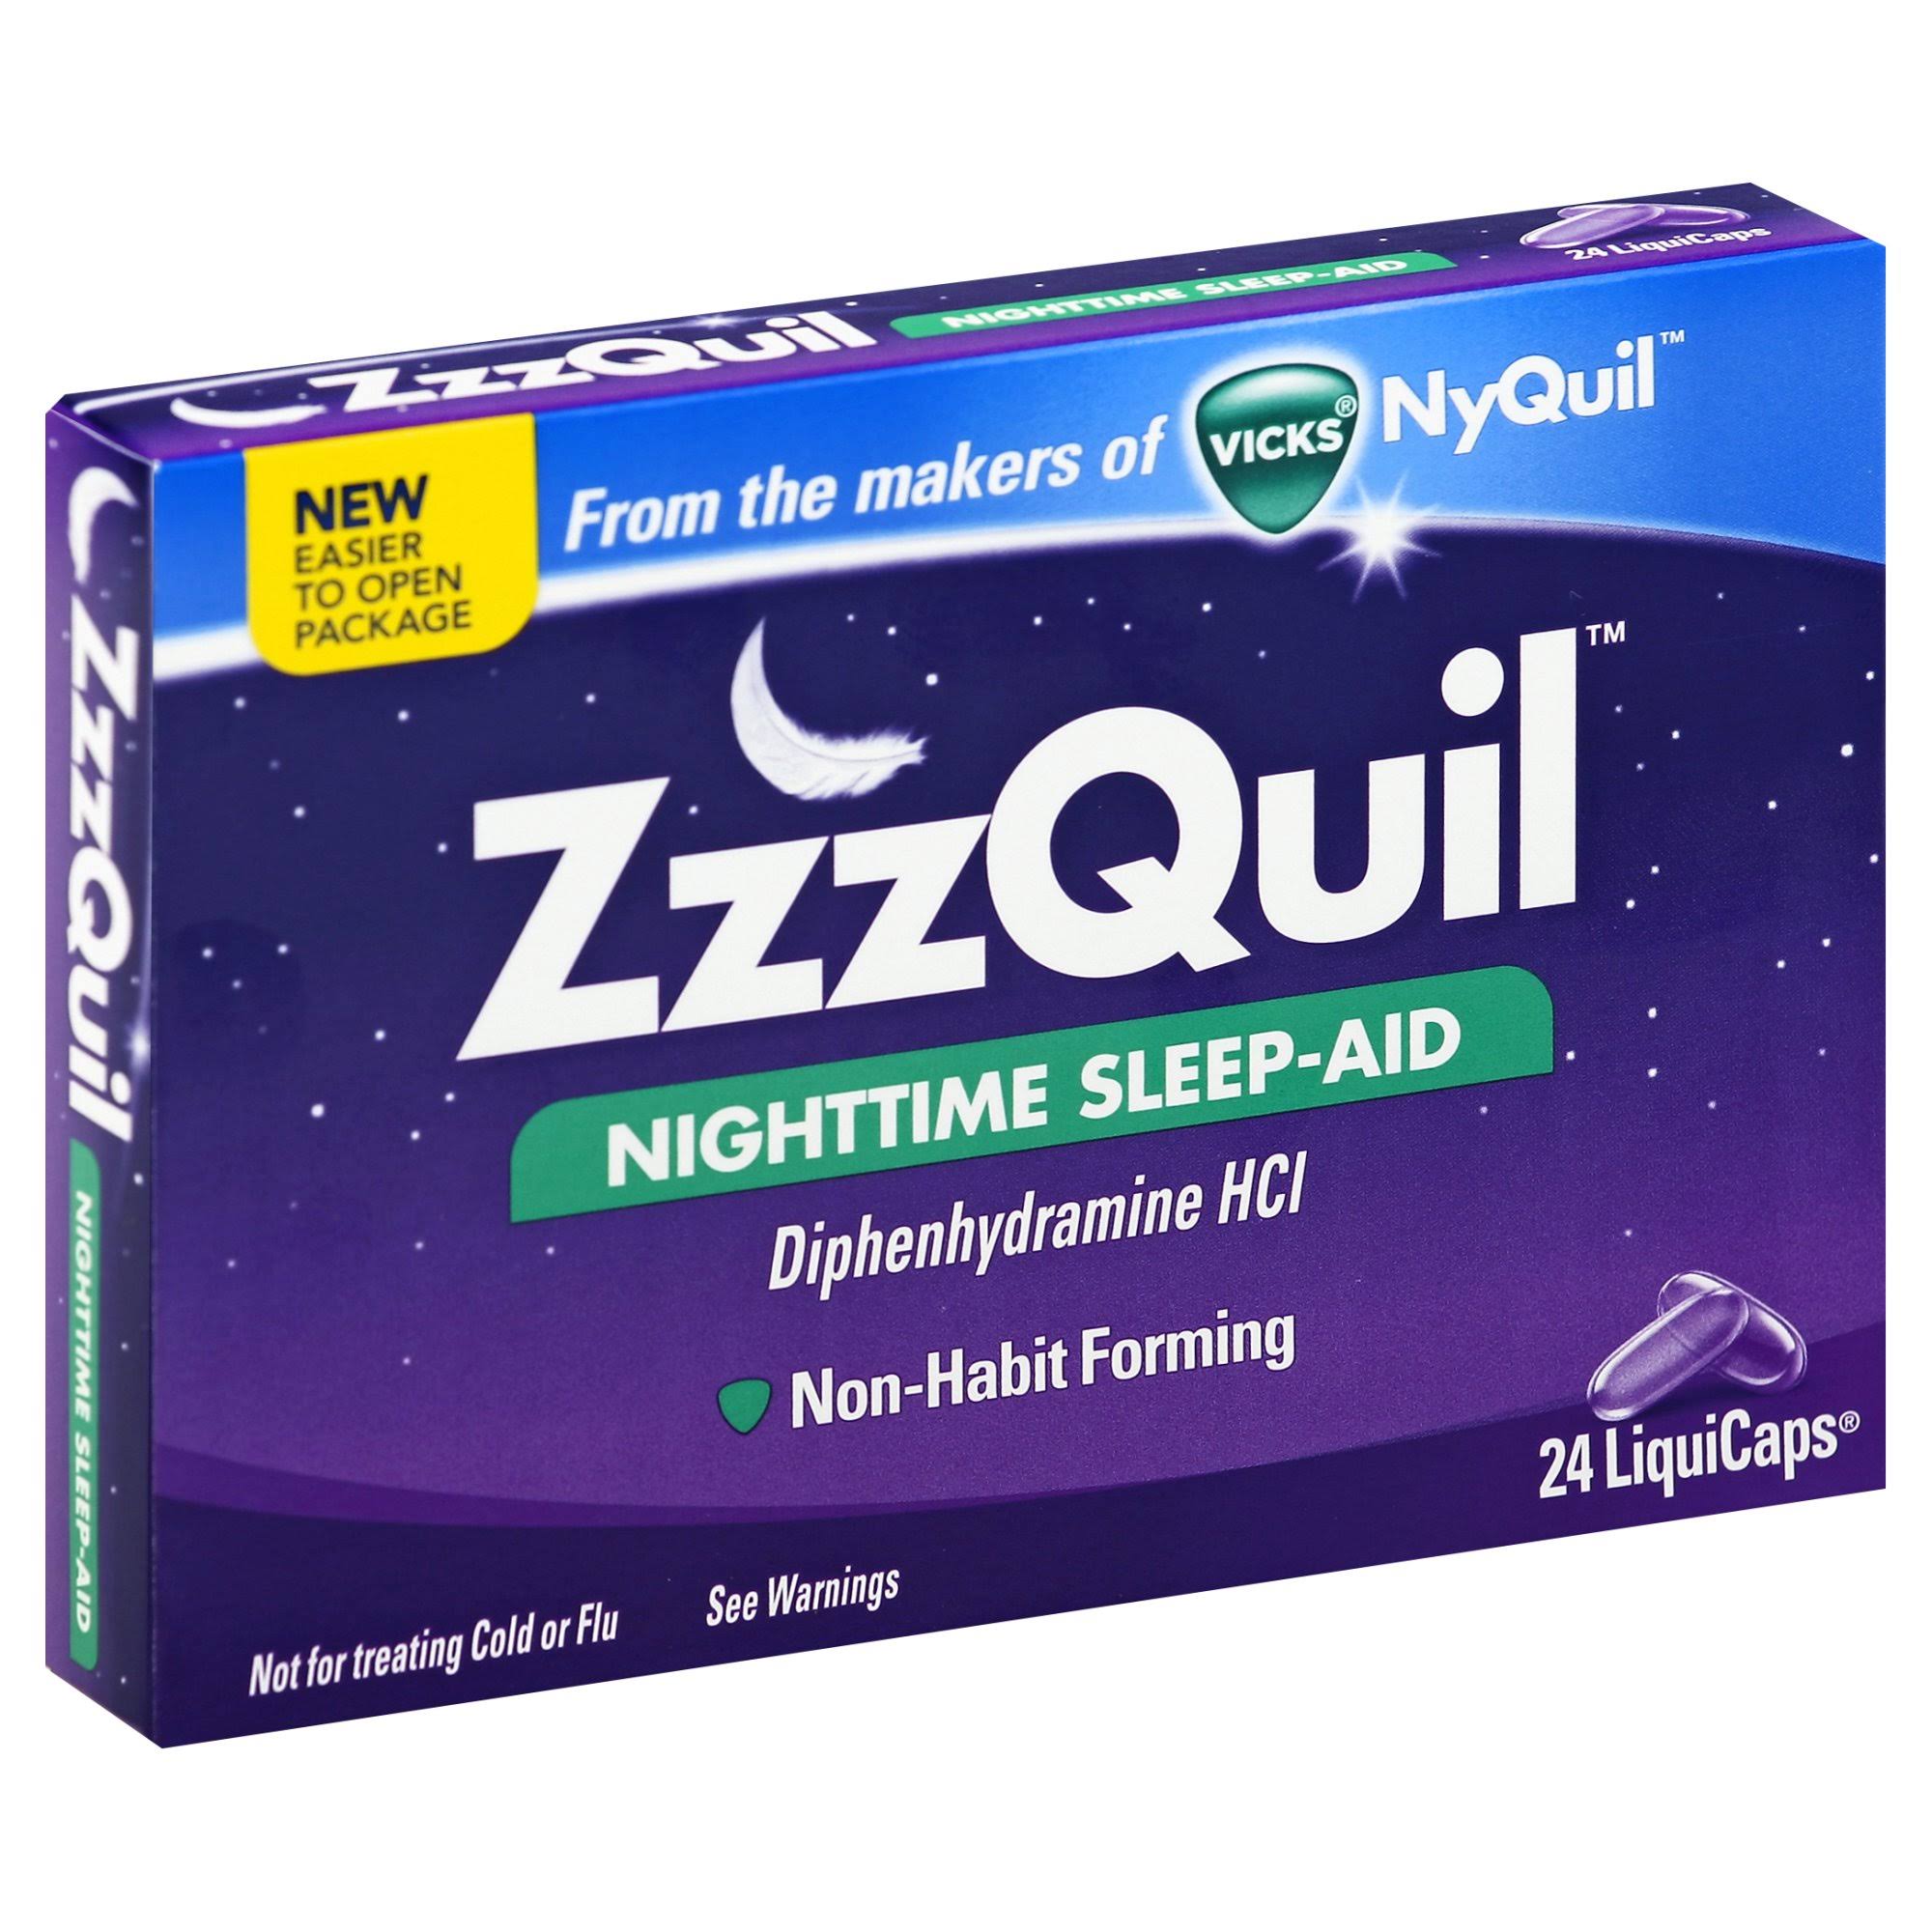 Vicks ZzzQuil Nighttime Sleep-Aid LiquiCaps - x24